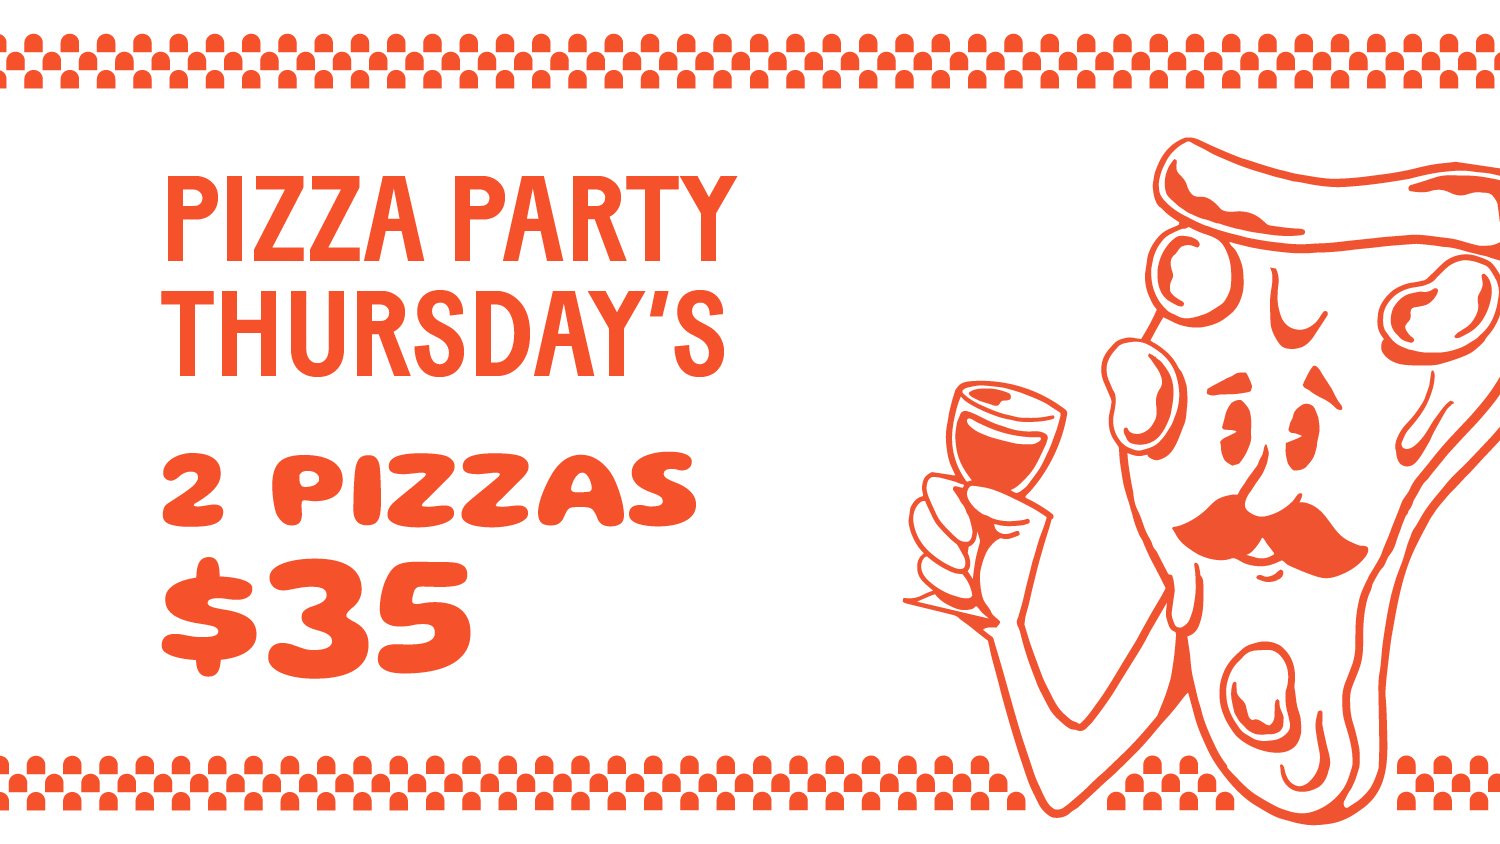 Mozza_Pizza Party Thursday_Web Tile.jpg